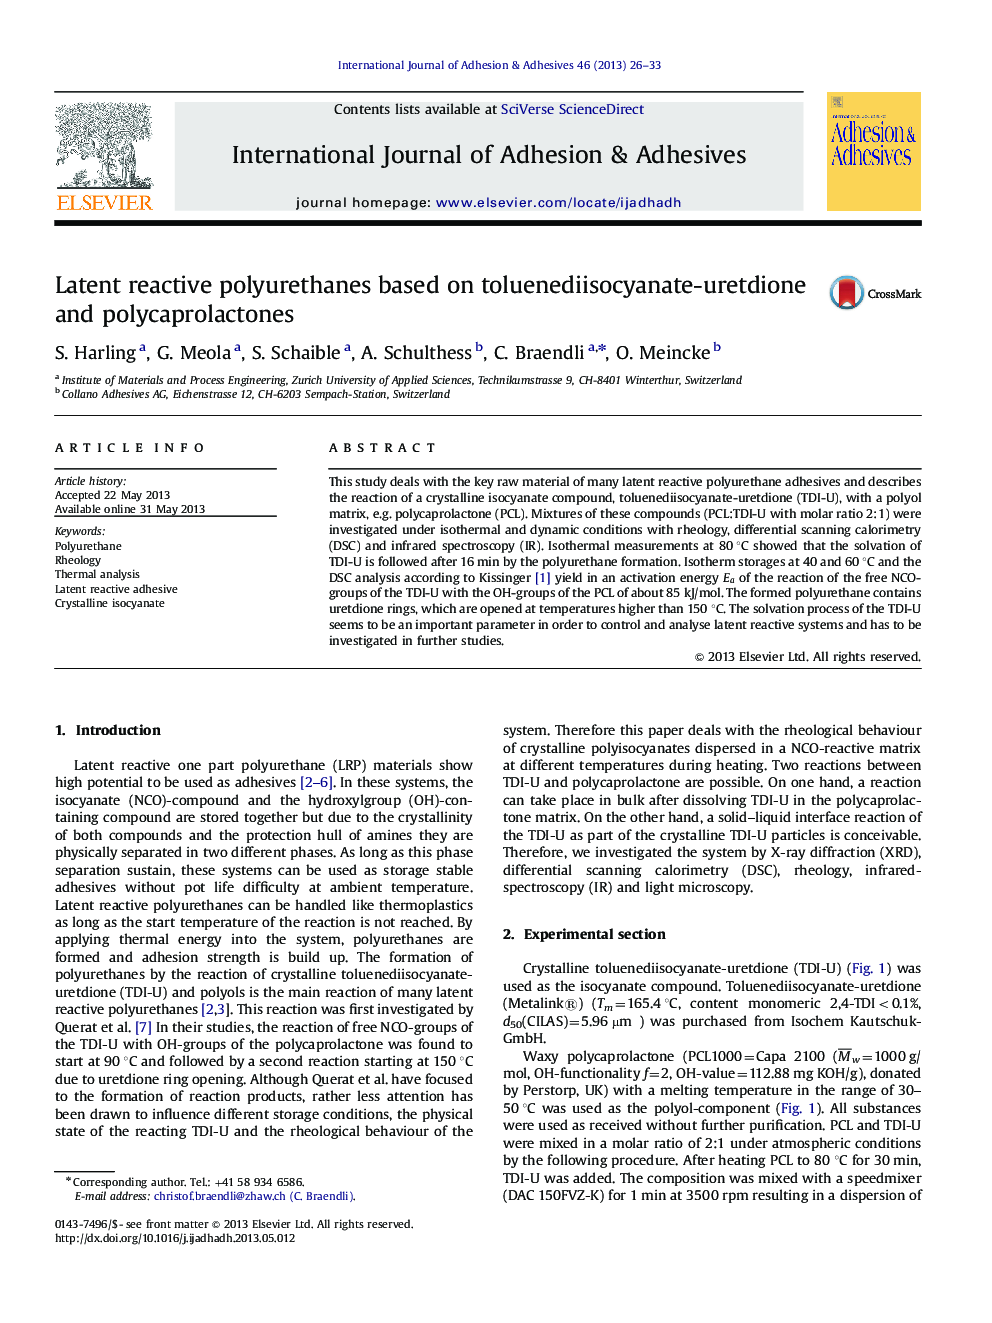 Latent reactive polyurethanes based on toluenediisocyanate-uretdione and polycaprolactones